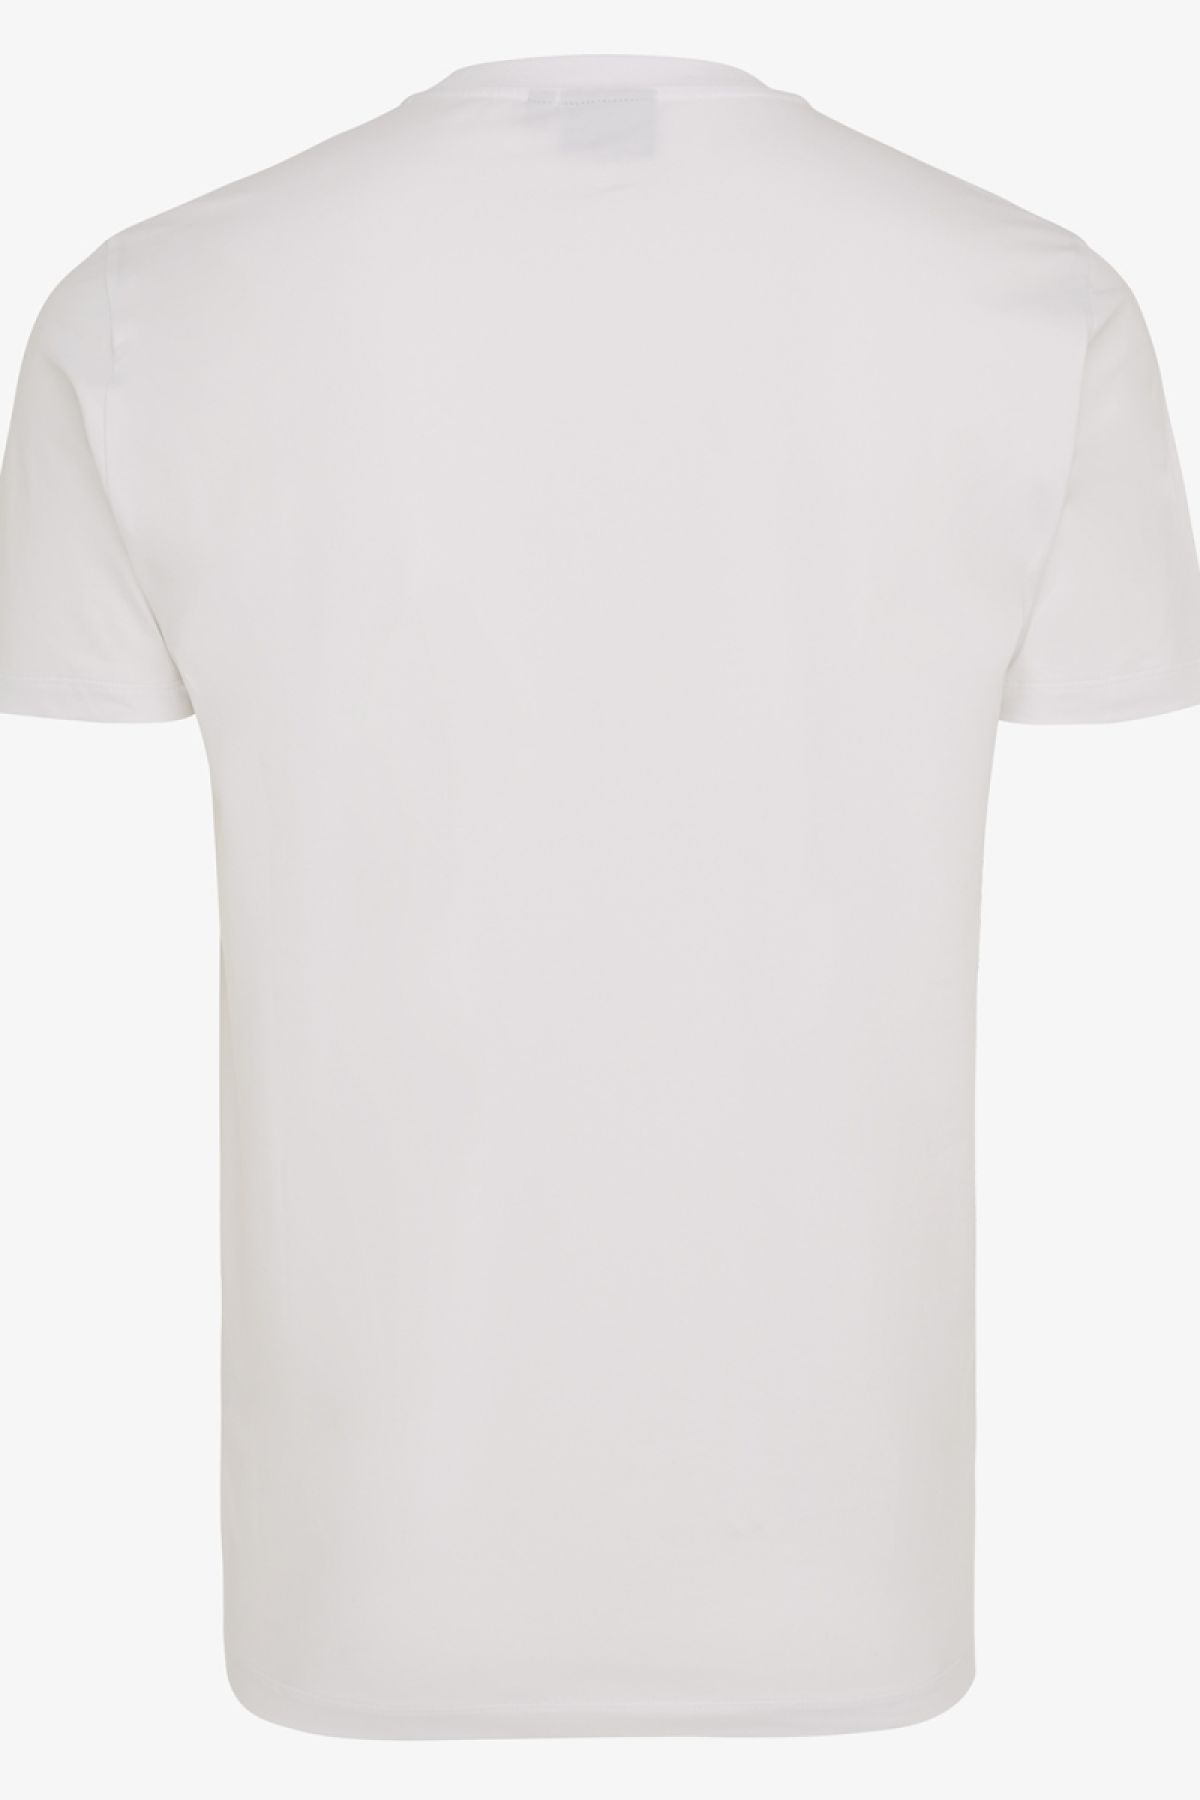 Ice cotton T-shirt white